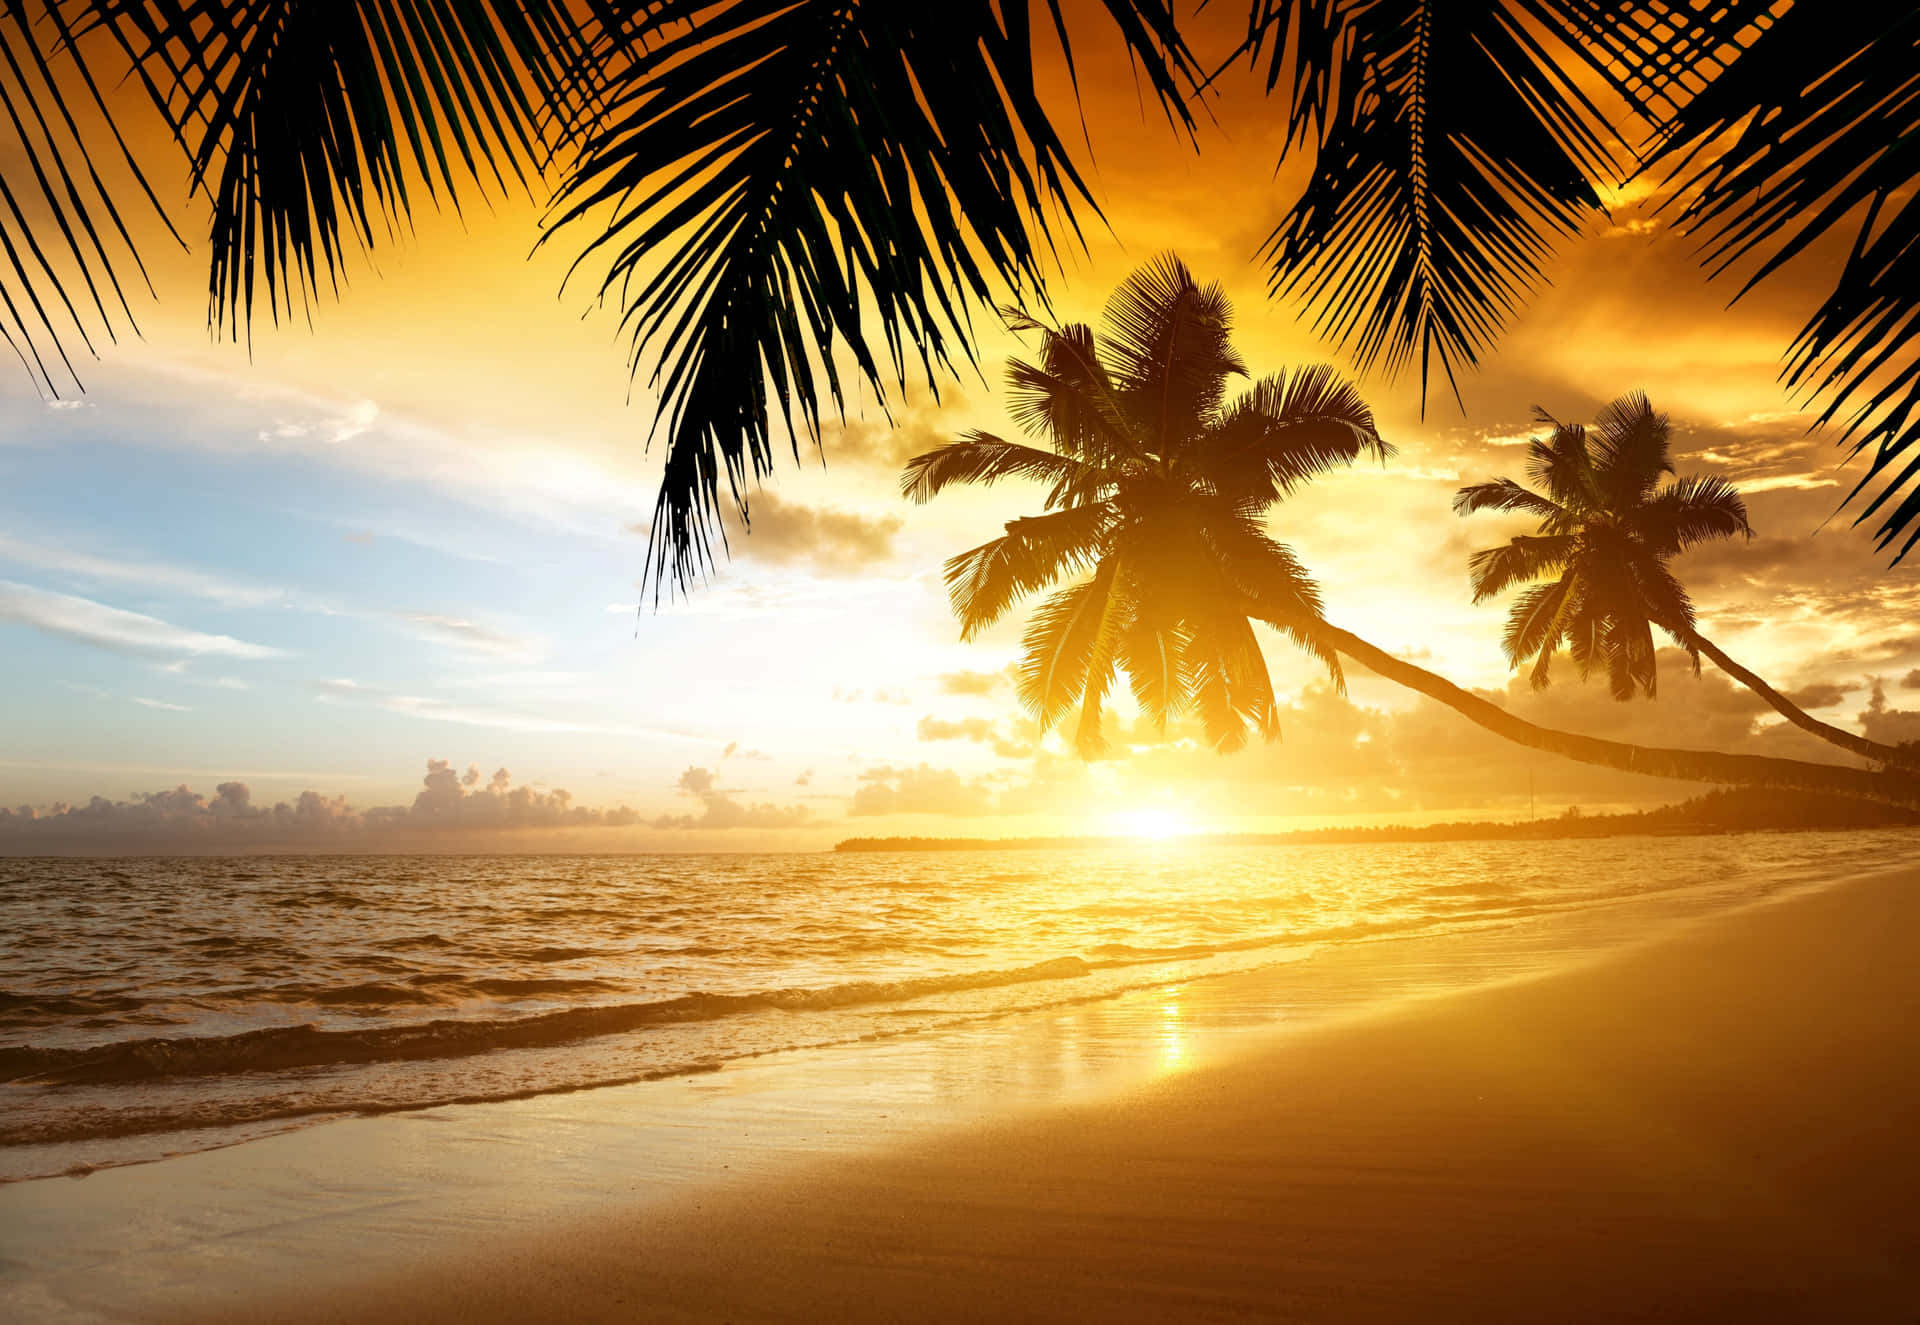 Caption: Tranquil Coconut Tree by the Seashore